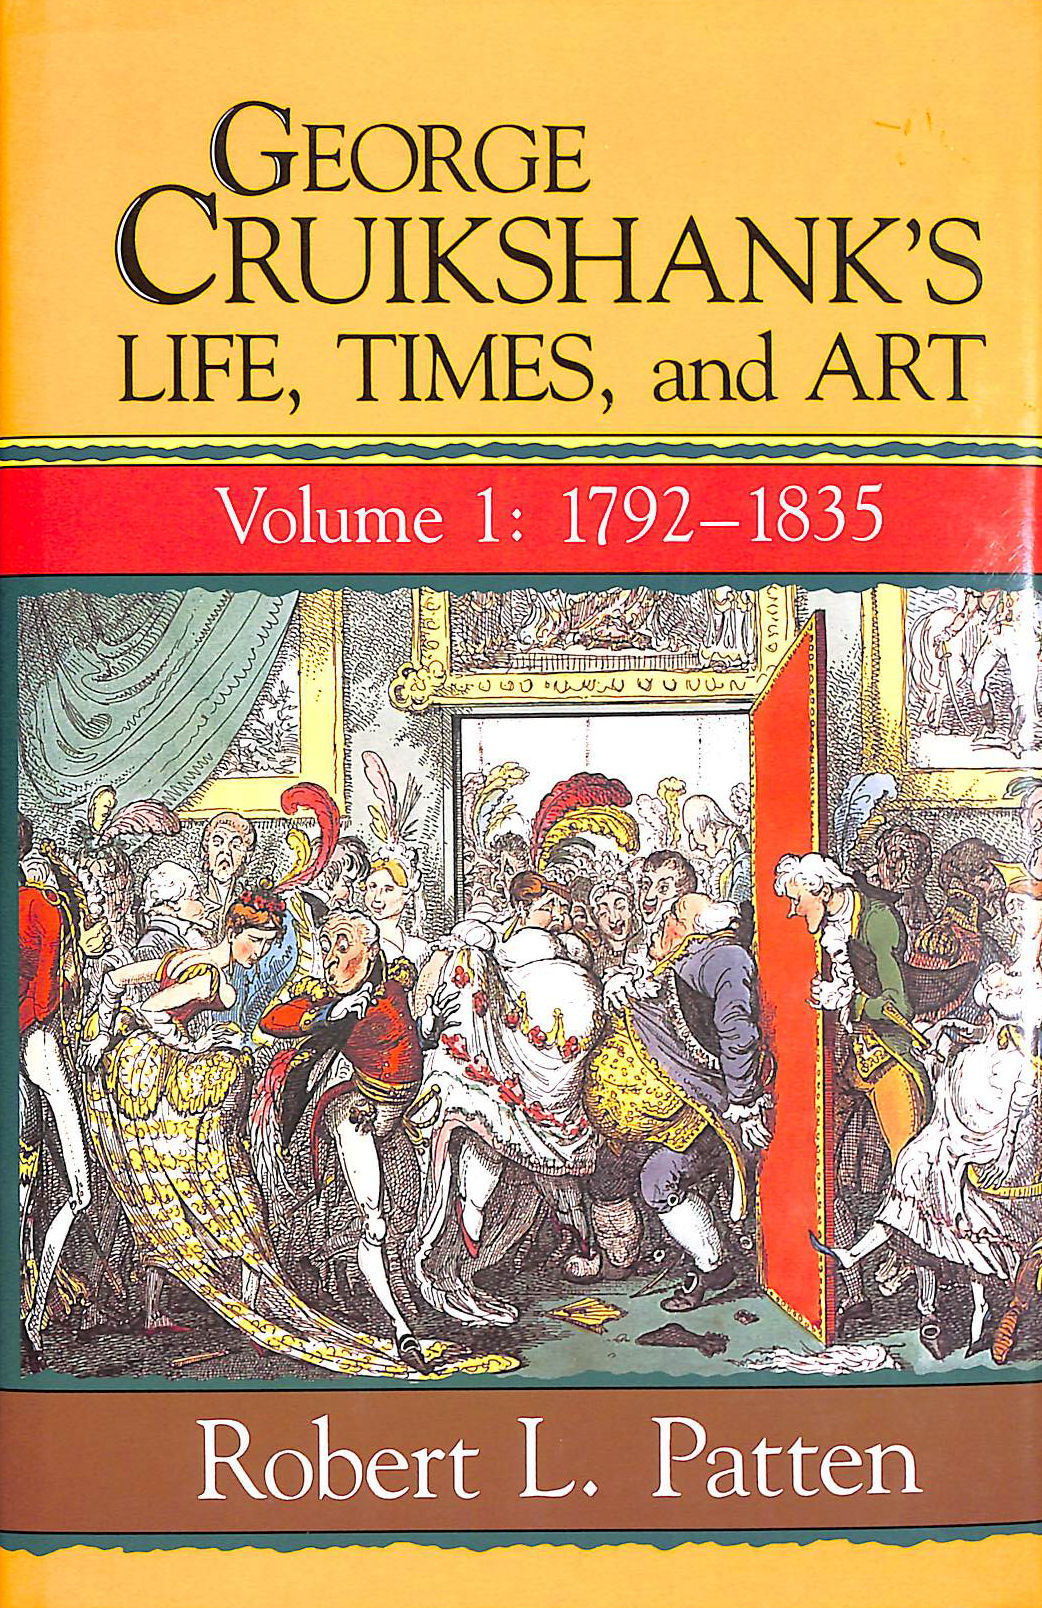 PATTEN, ROBERT L. - George Cruikshank's Life, Times and Art: Volume 1: 1792-1835: Volume I: 1792-1835